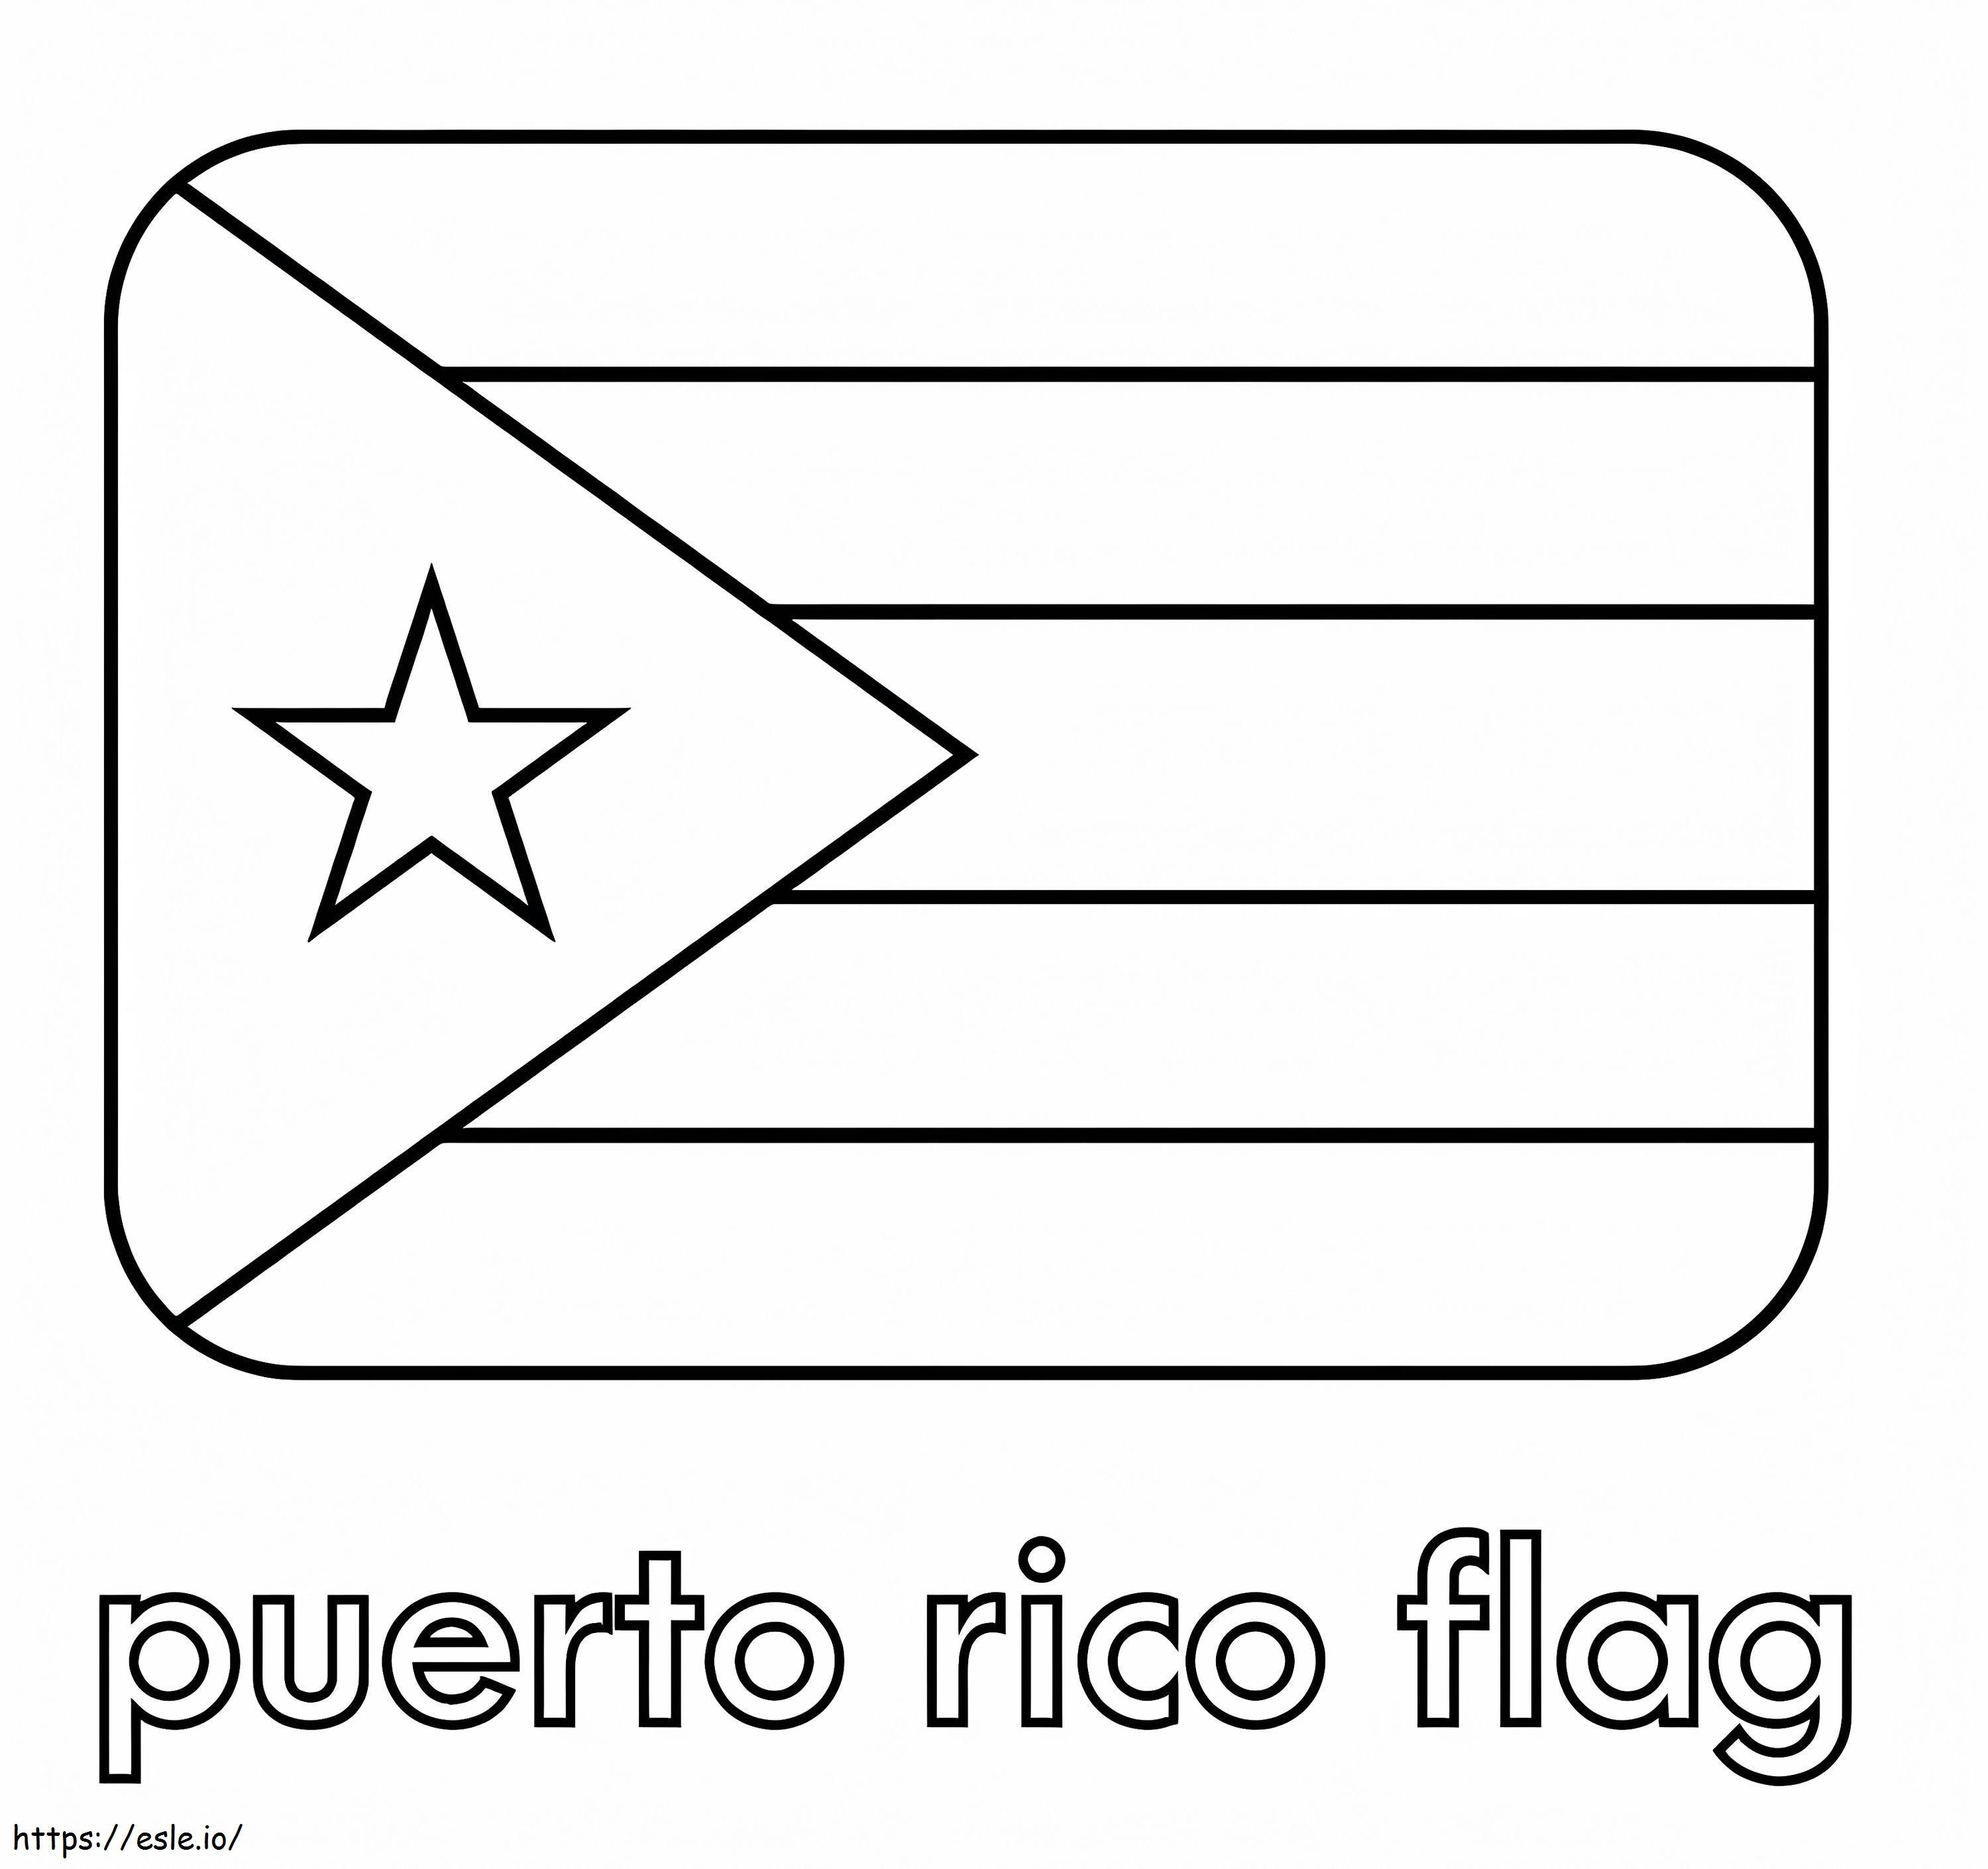 Printable Puerto Rico Flag coloring page